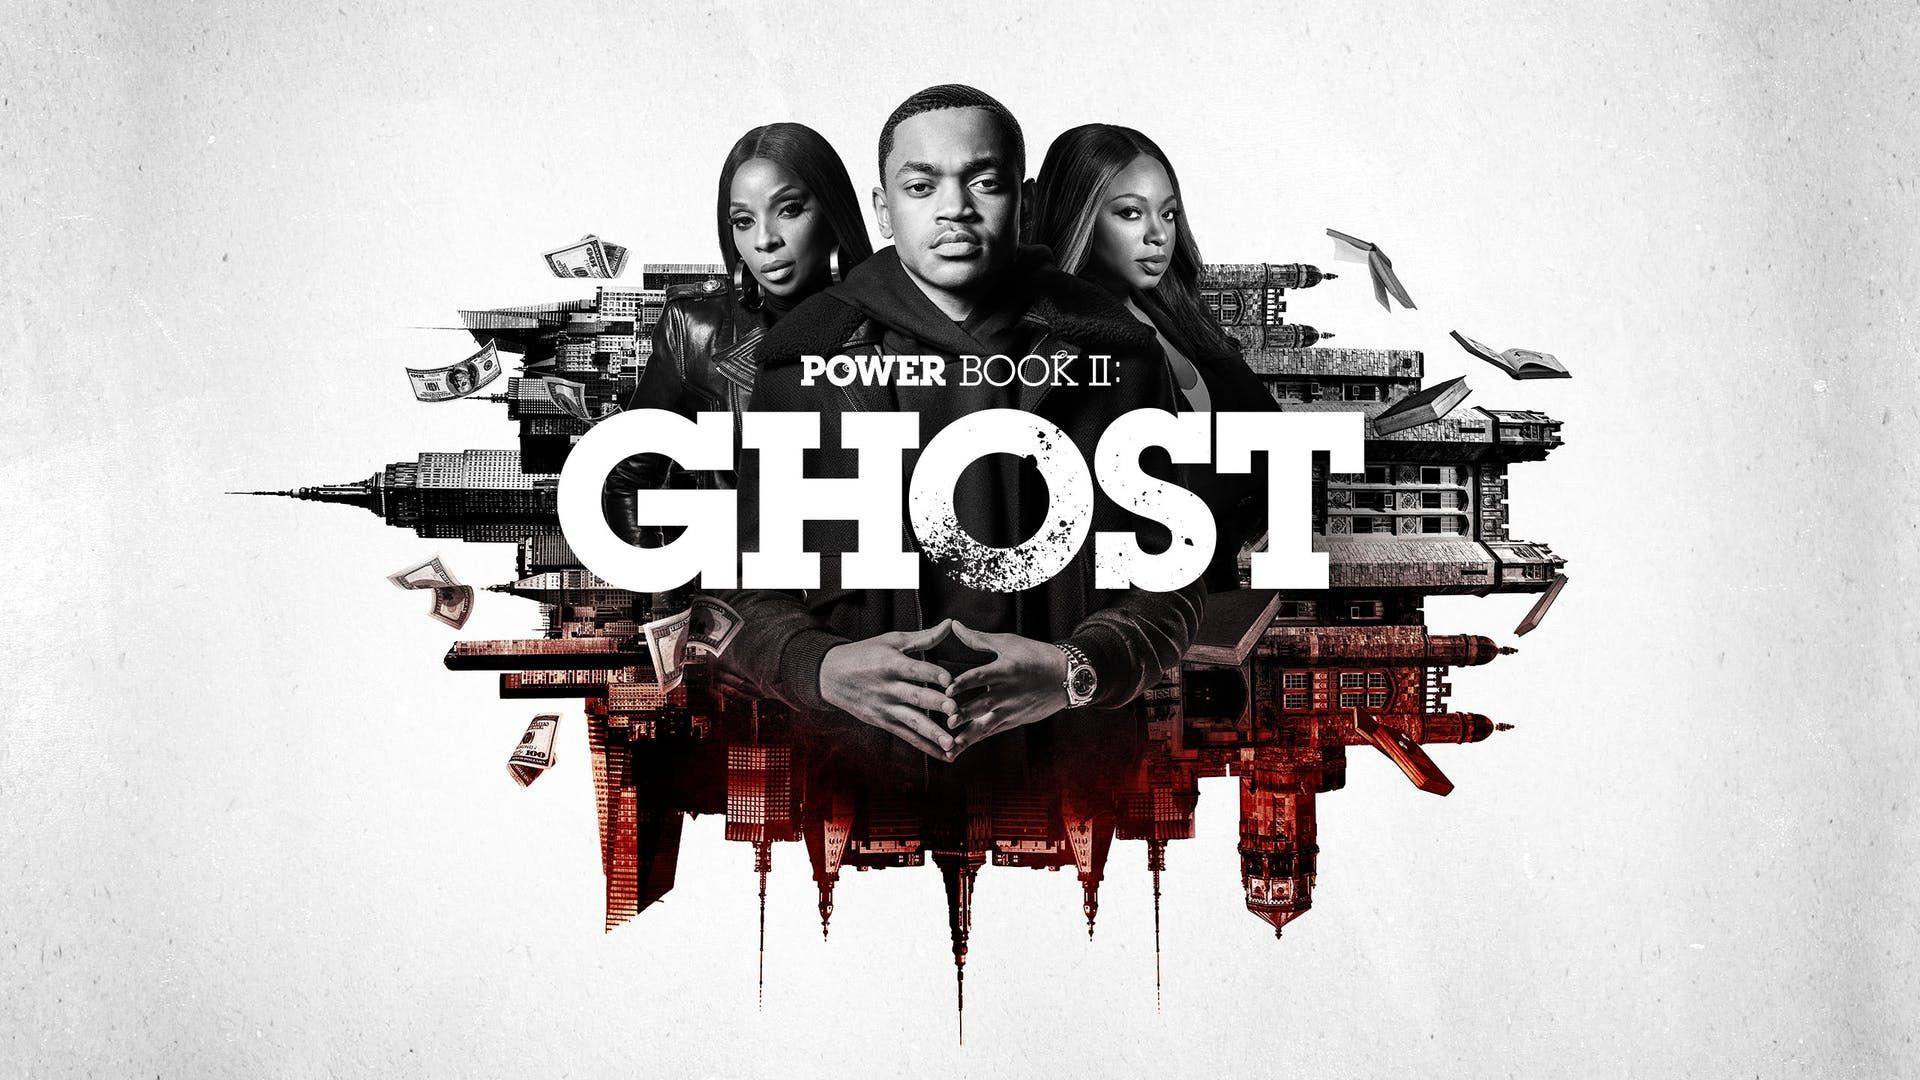 Show Power Book II: Ghost